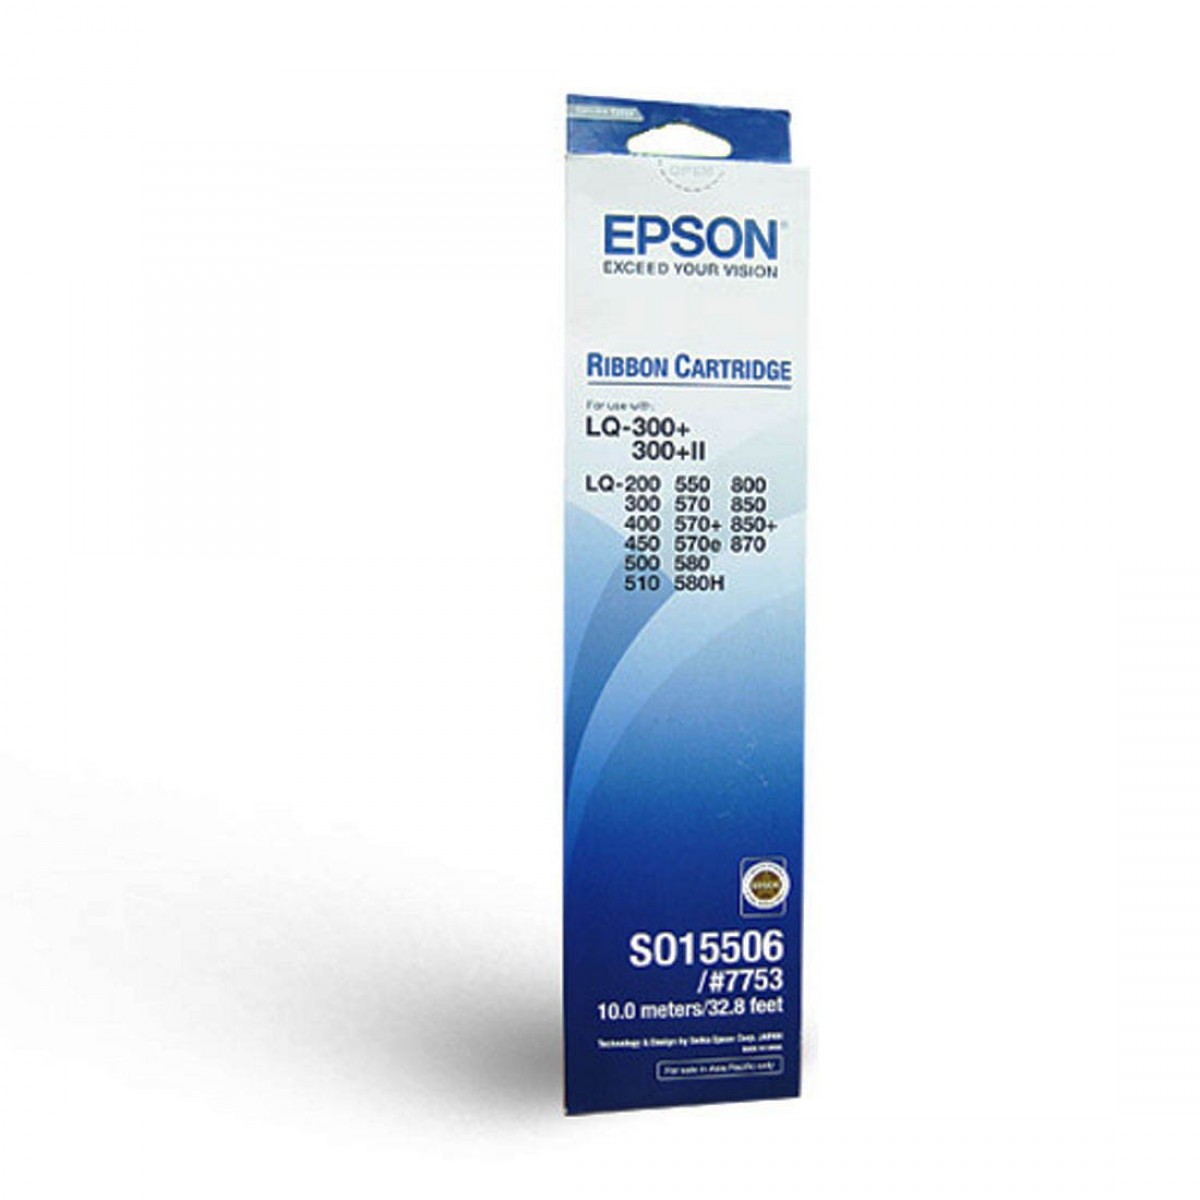 Ribbon mực In Epson LQ-300/500/550/570/570/800/850/850/870